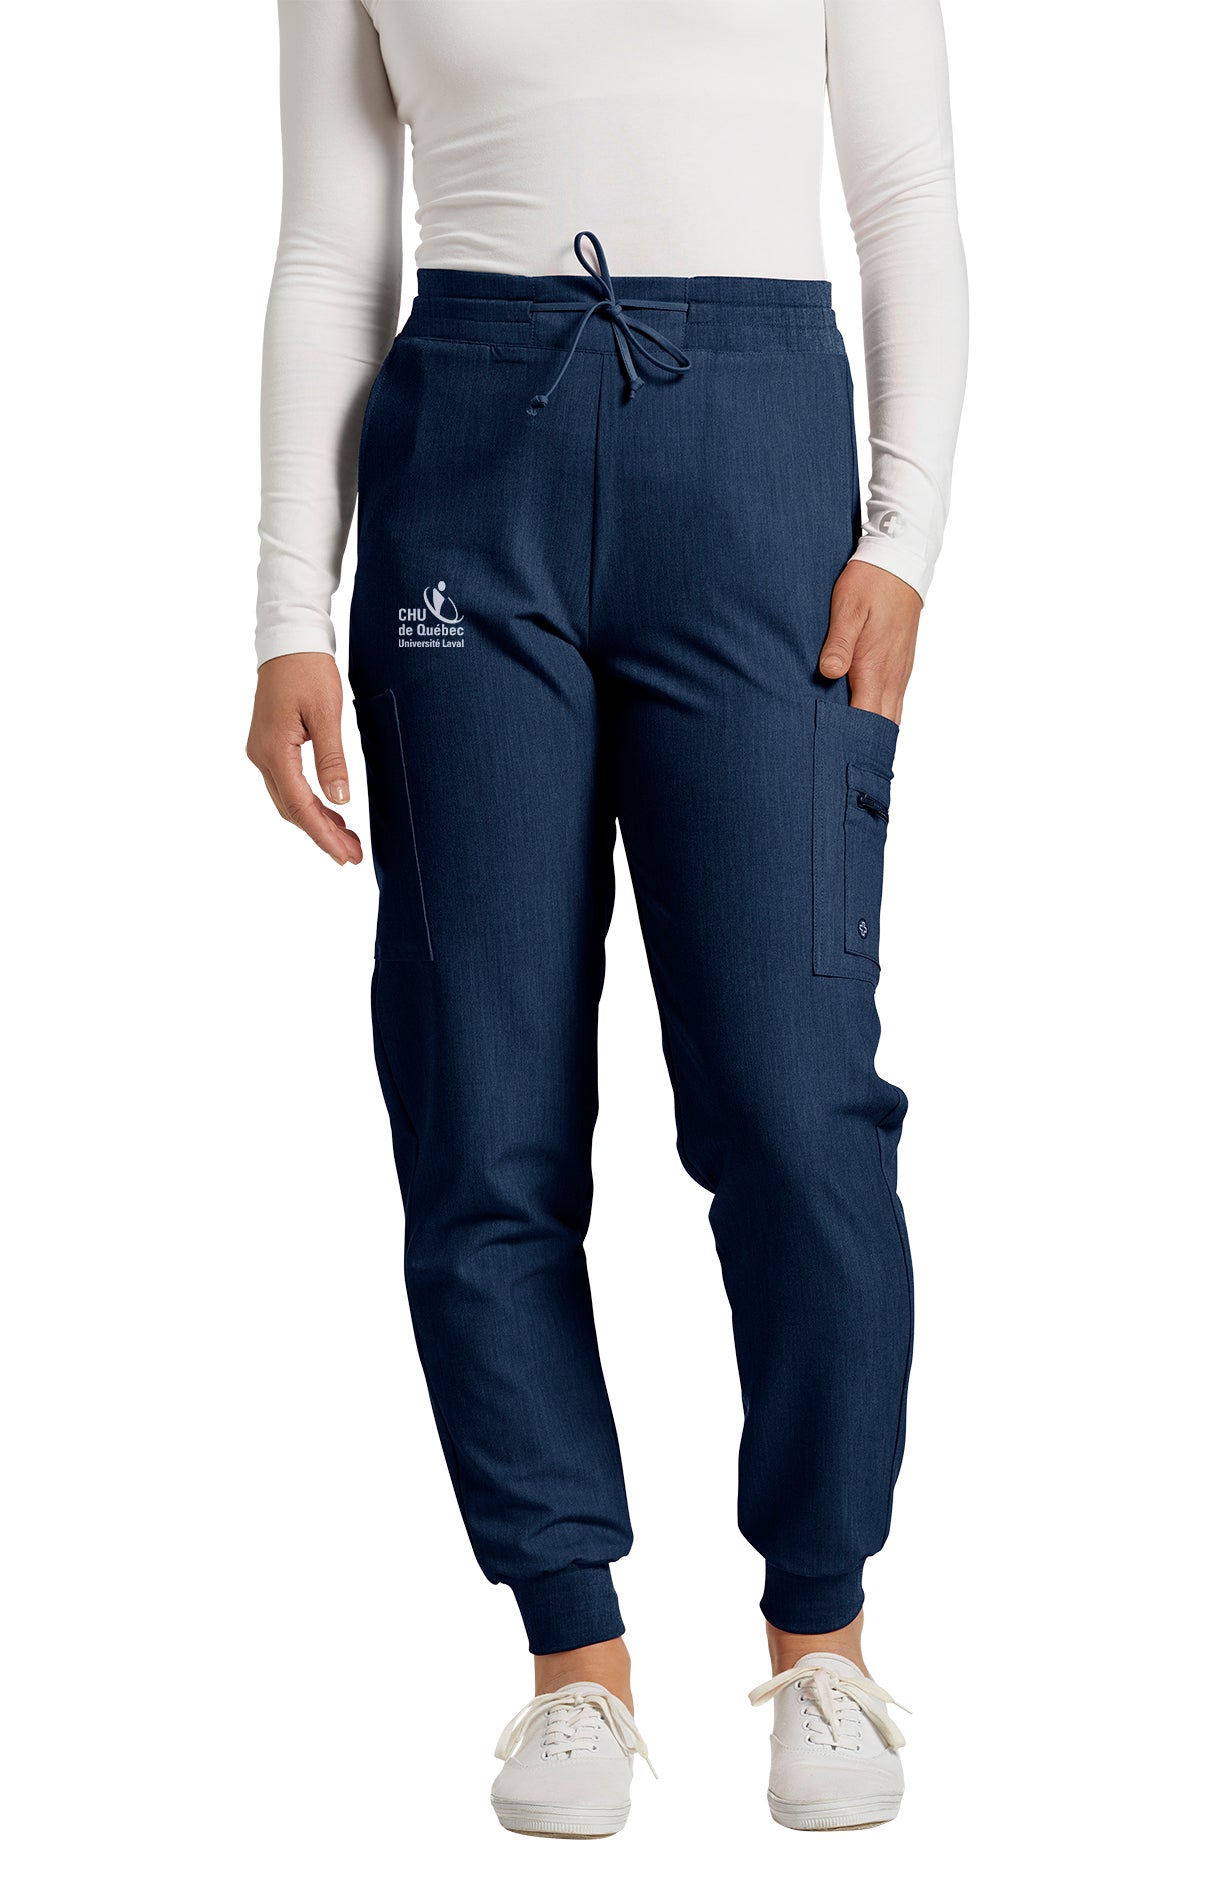 Pantalon de travail type Jogger avec poches cargo Uniformes Sélect #380CHU navy